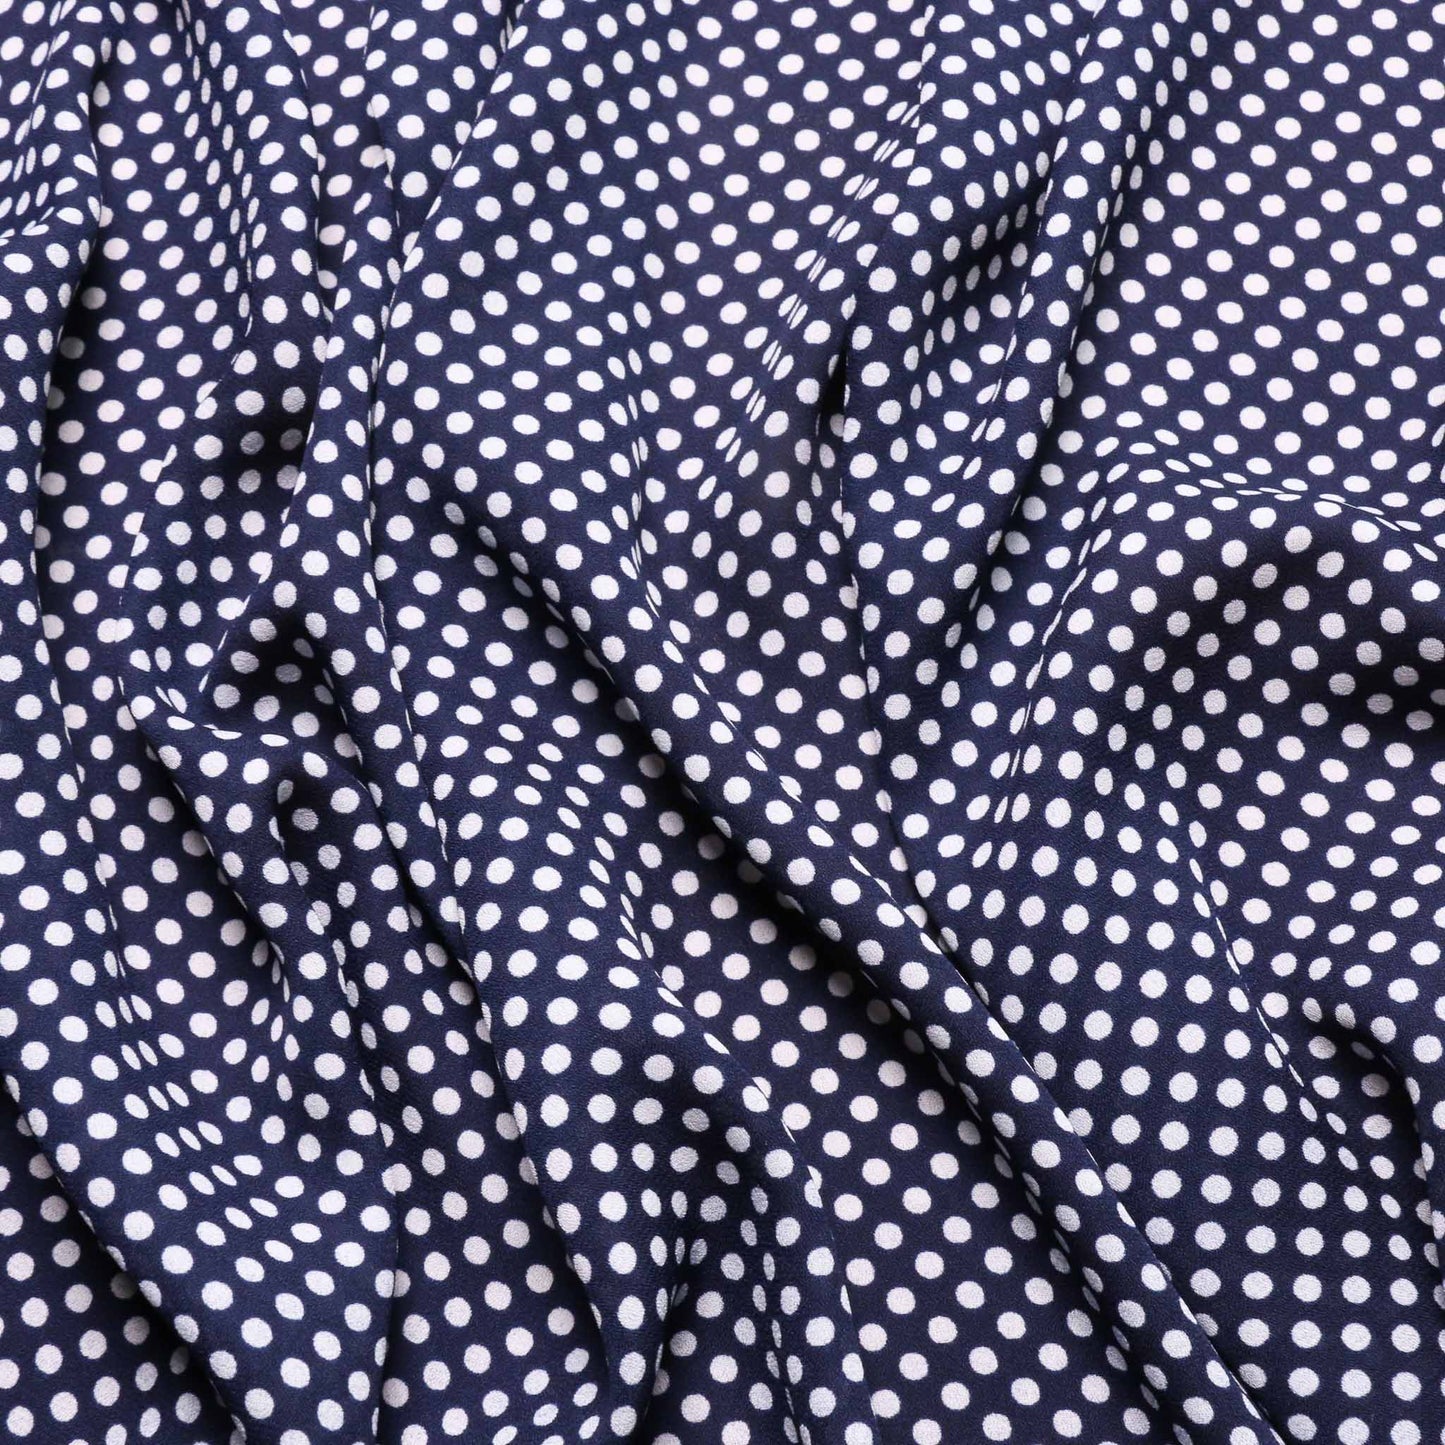 dressmaking fabric sale uk georgette polka dot print in navy and white